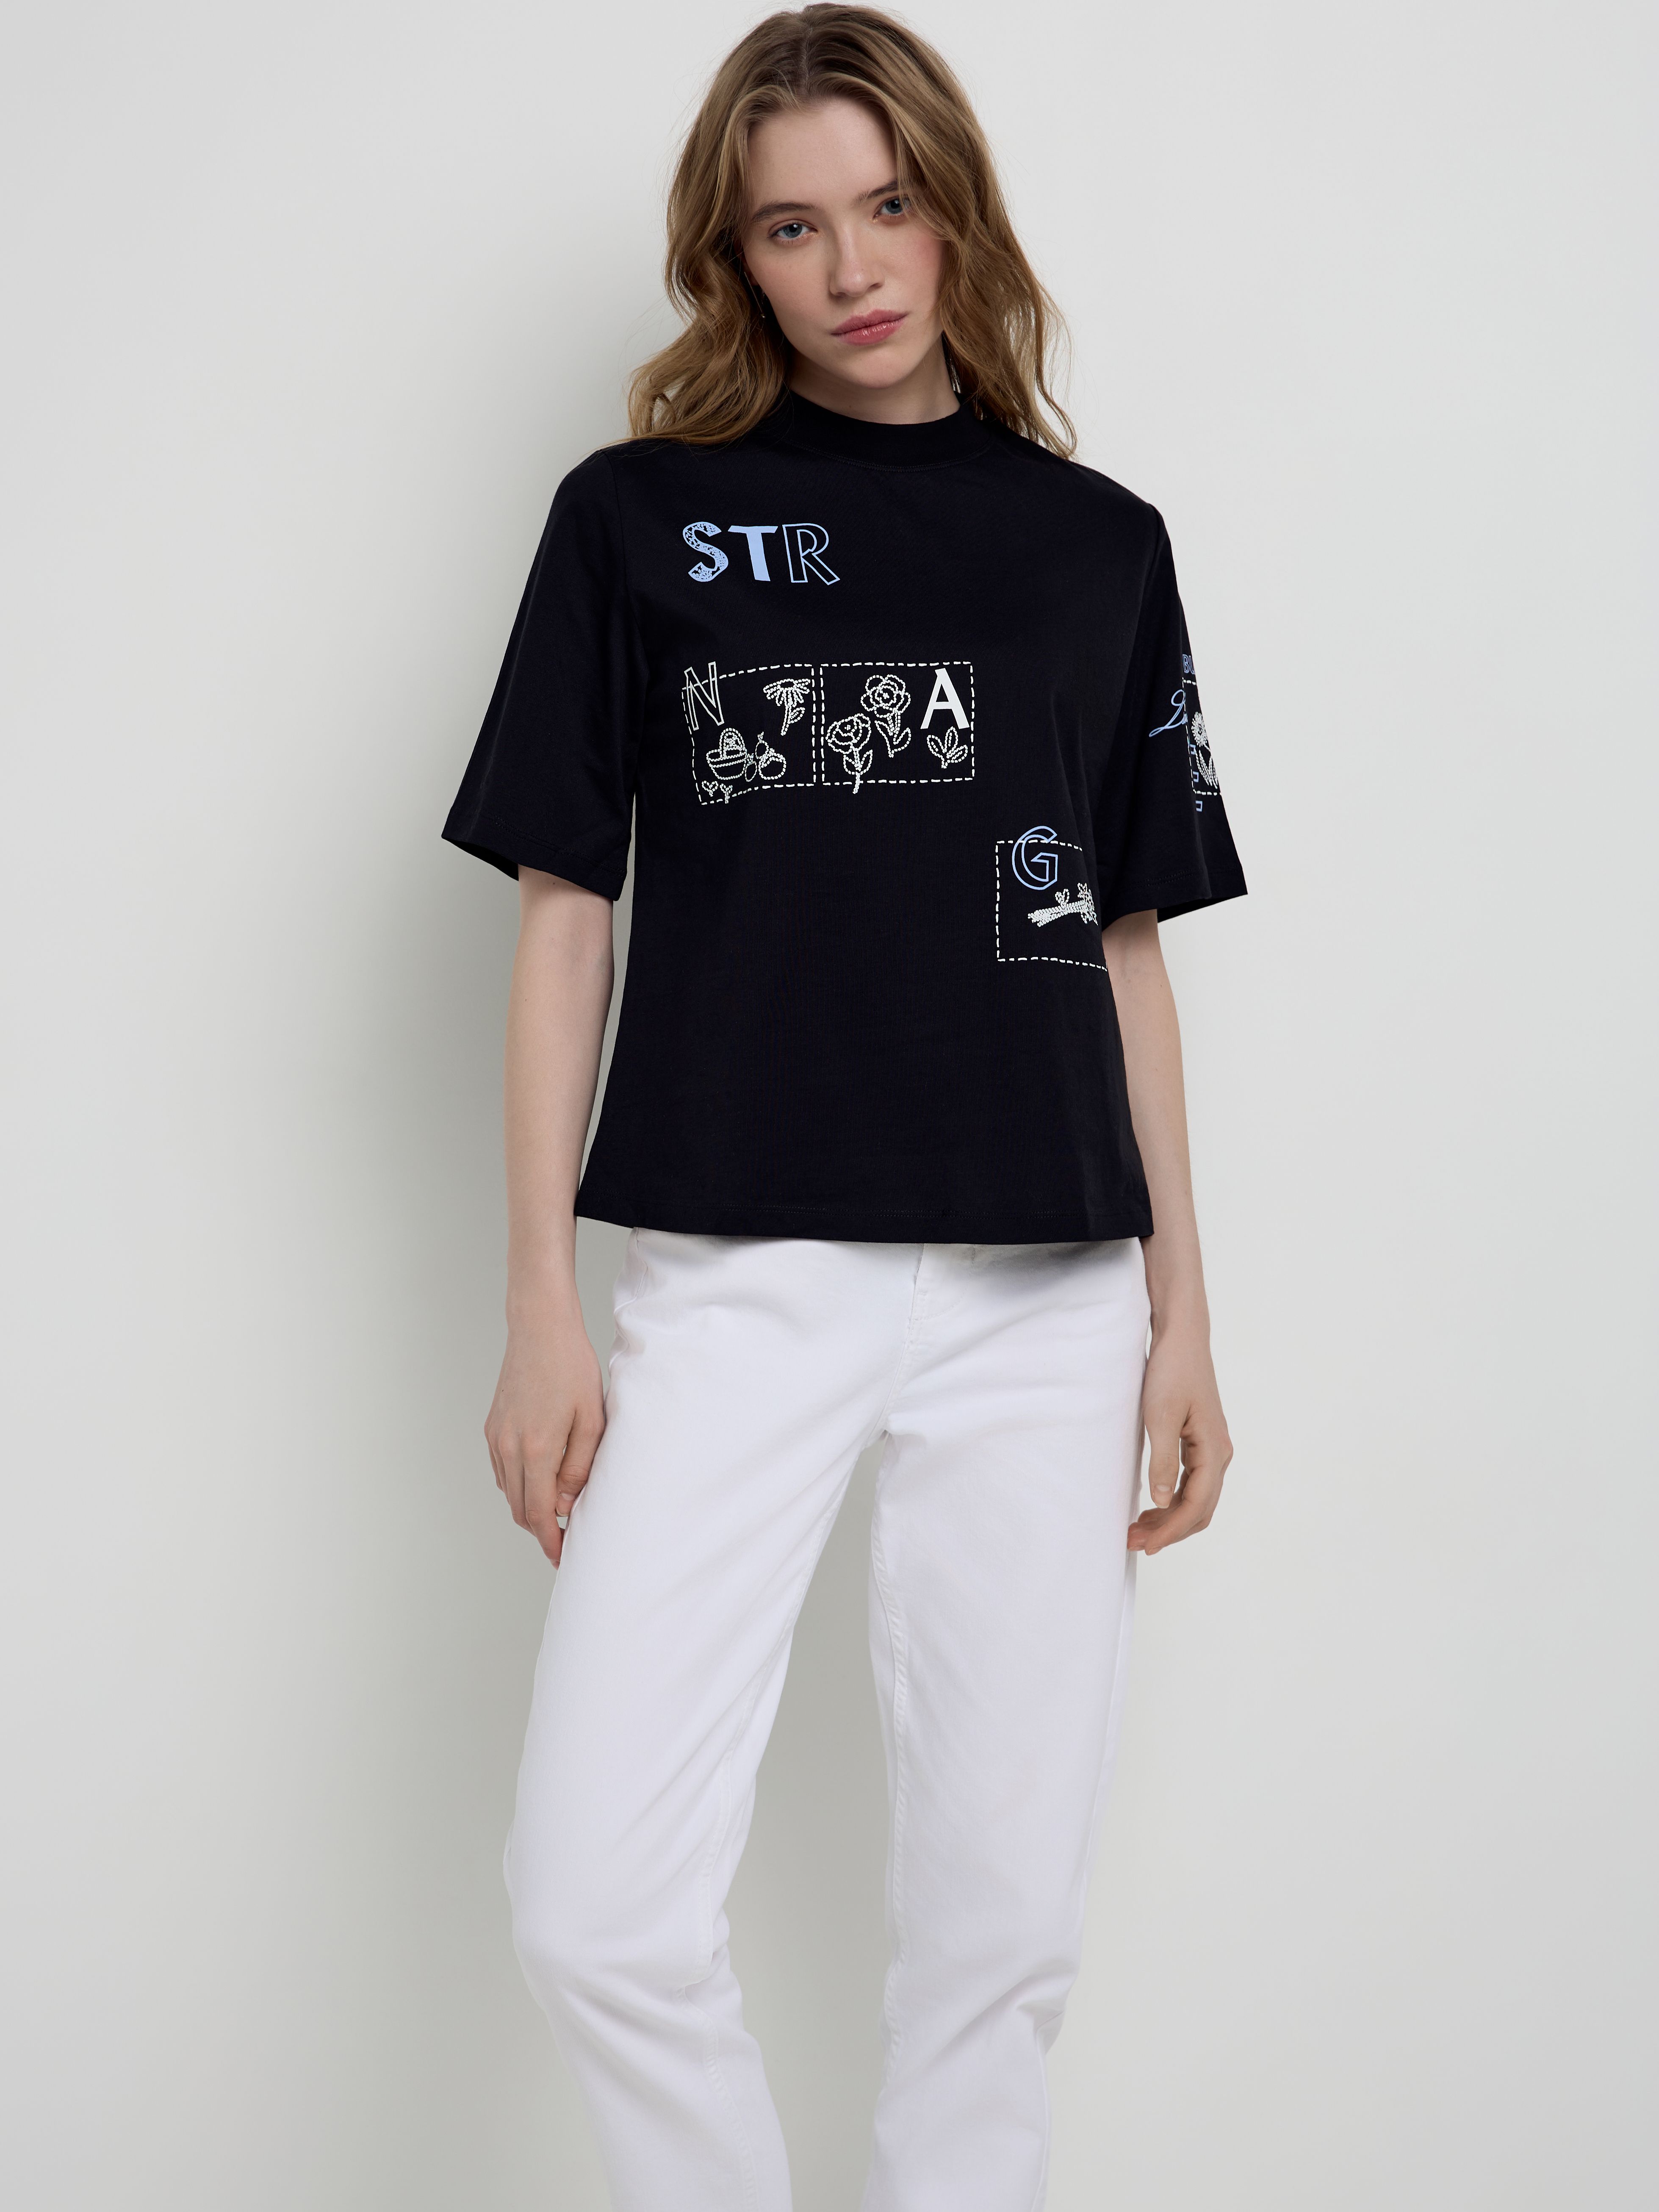 Свободная футболка из хлопка с рисунком «Letters» LD 2098 Conte ⭐️, цвет black, размер 170-100/xl